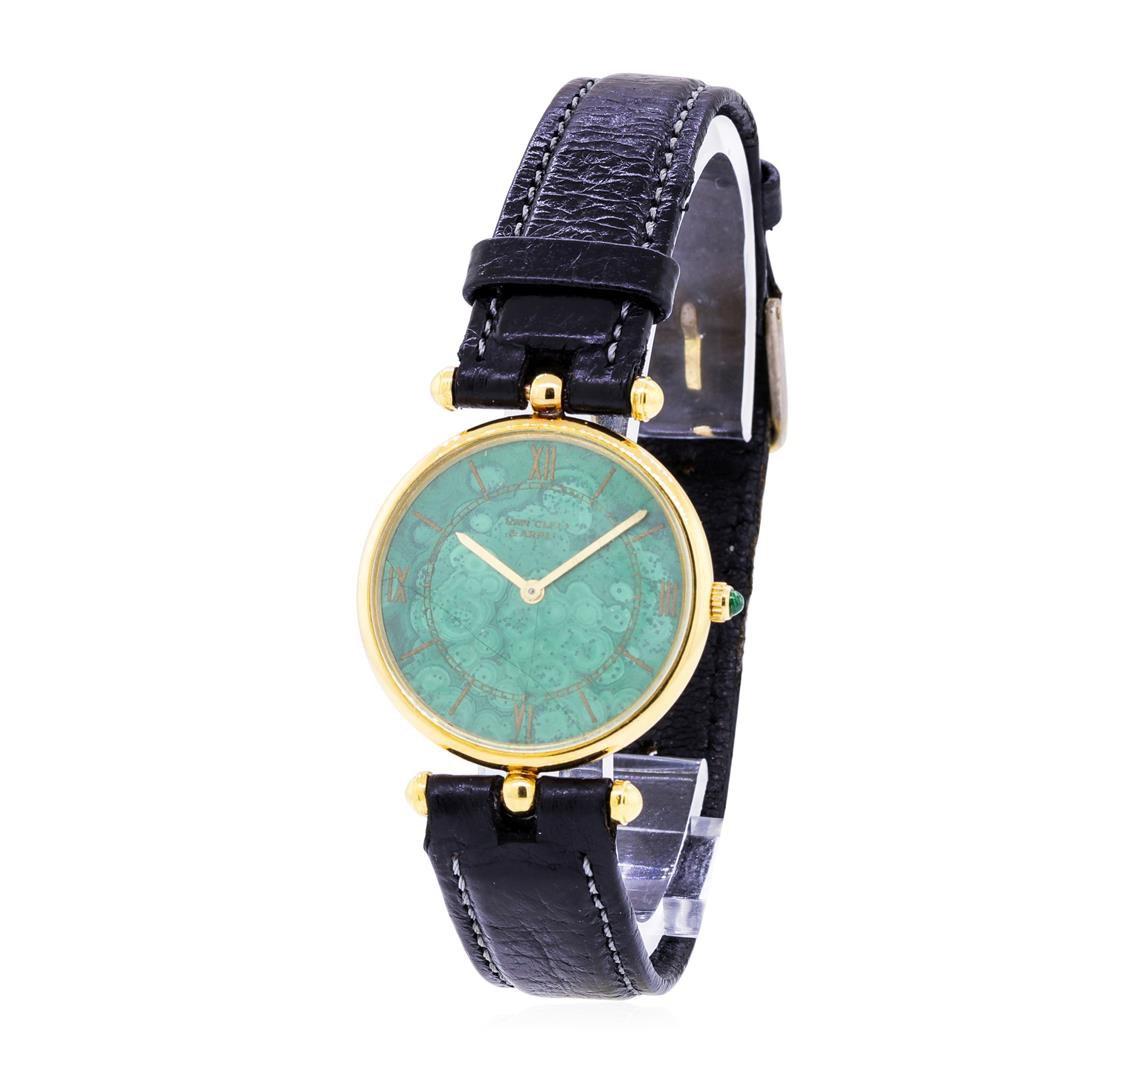 Piaget / Van Cleef and Arpels Wristwatch - 18KT Yellow Gold